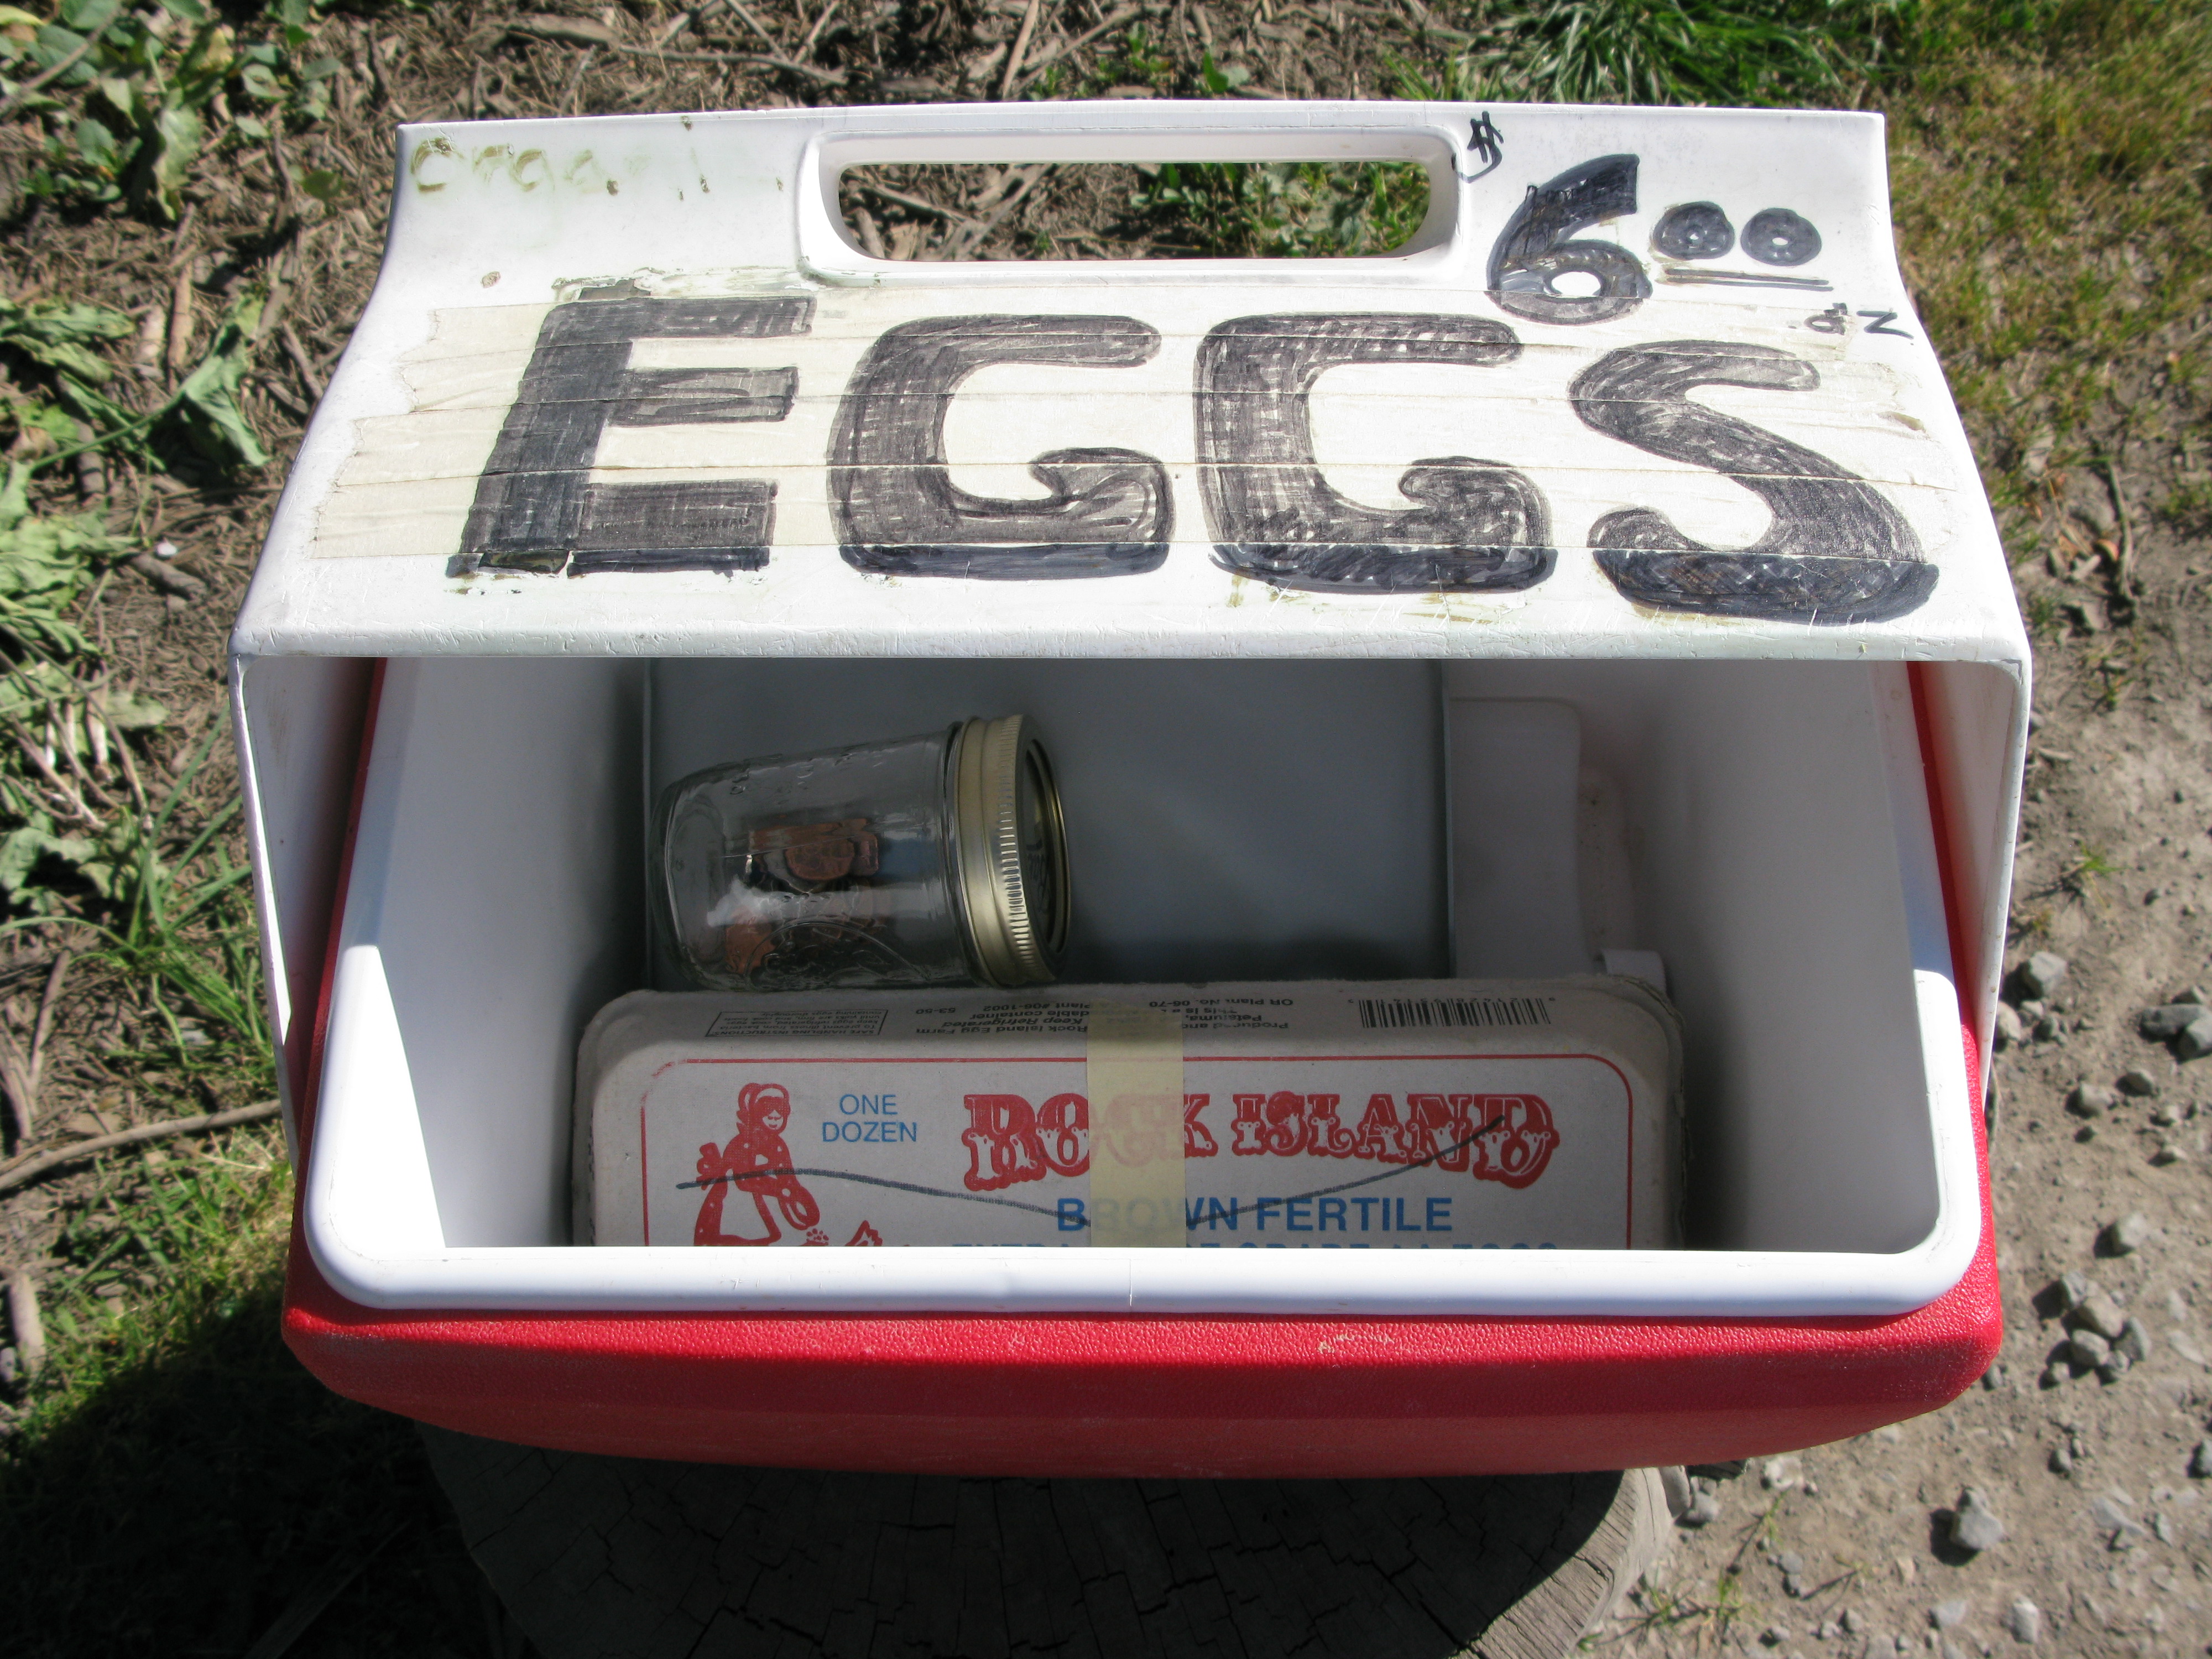 Eggs $6